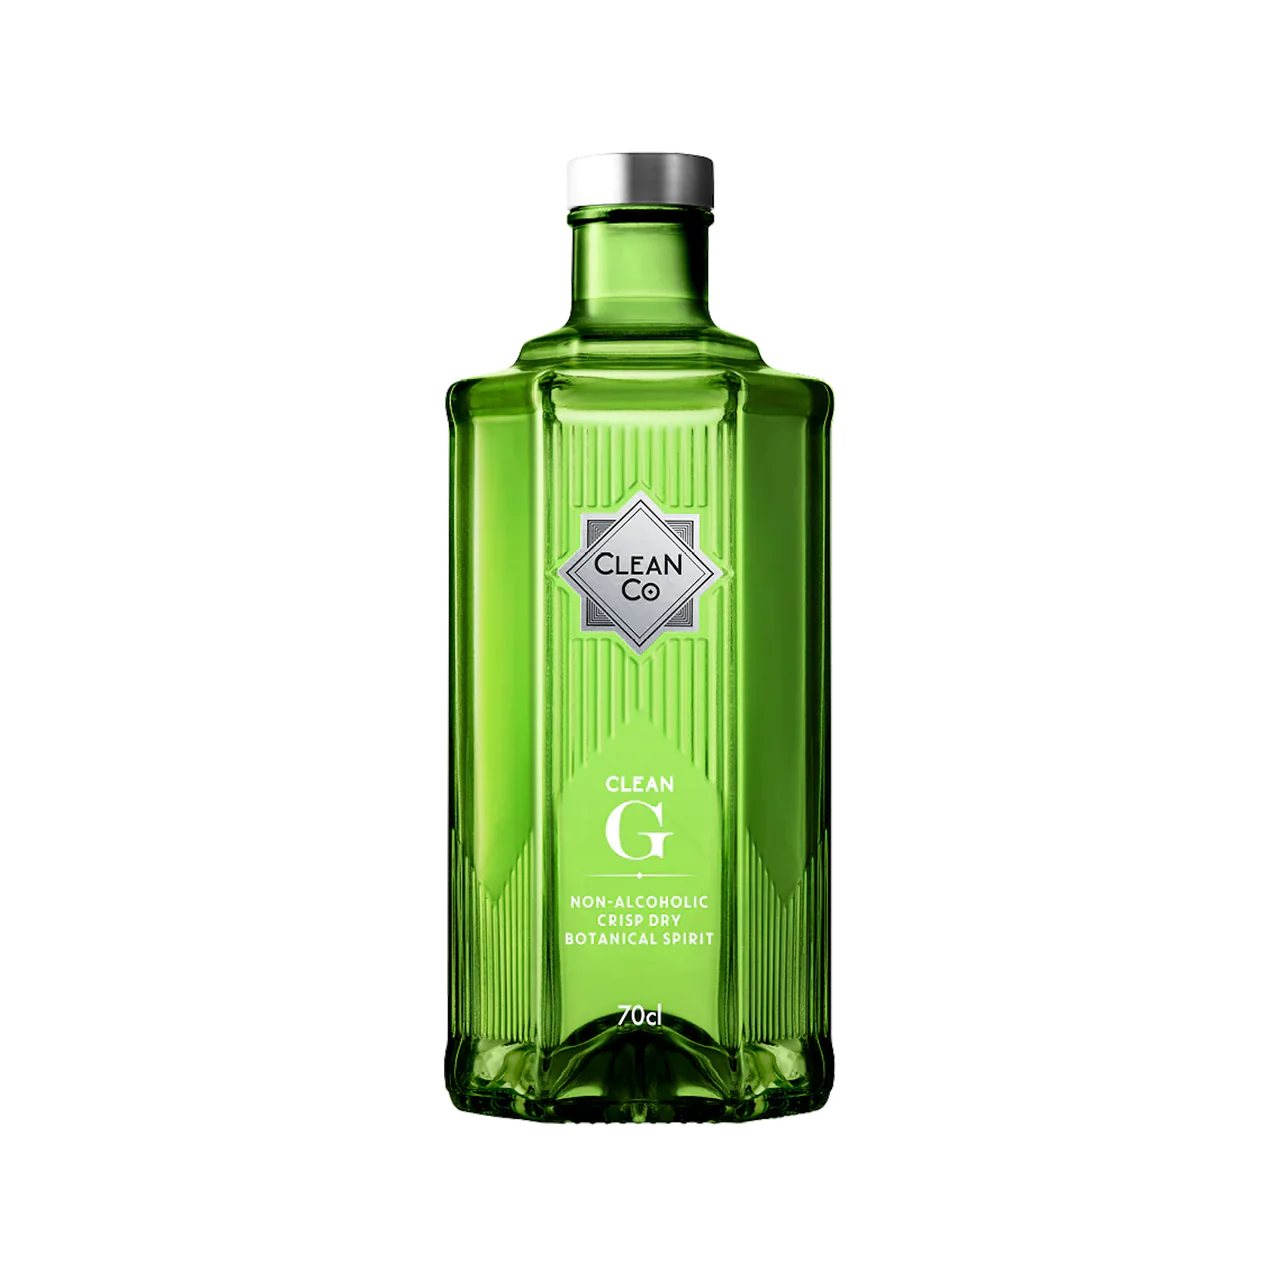 CleanCo-Clean G Gin